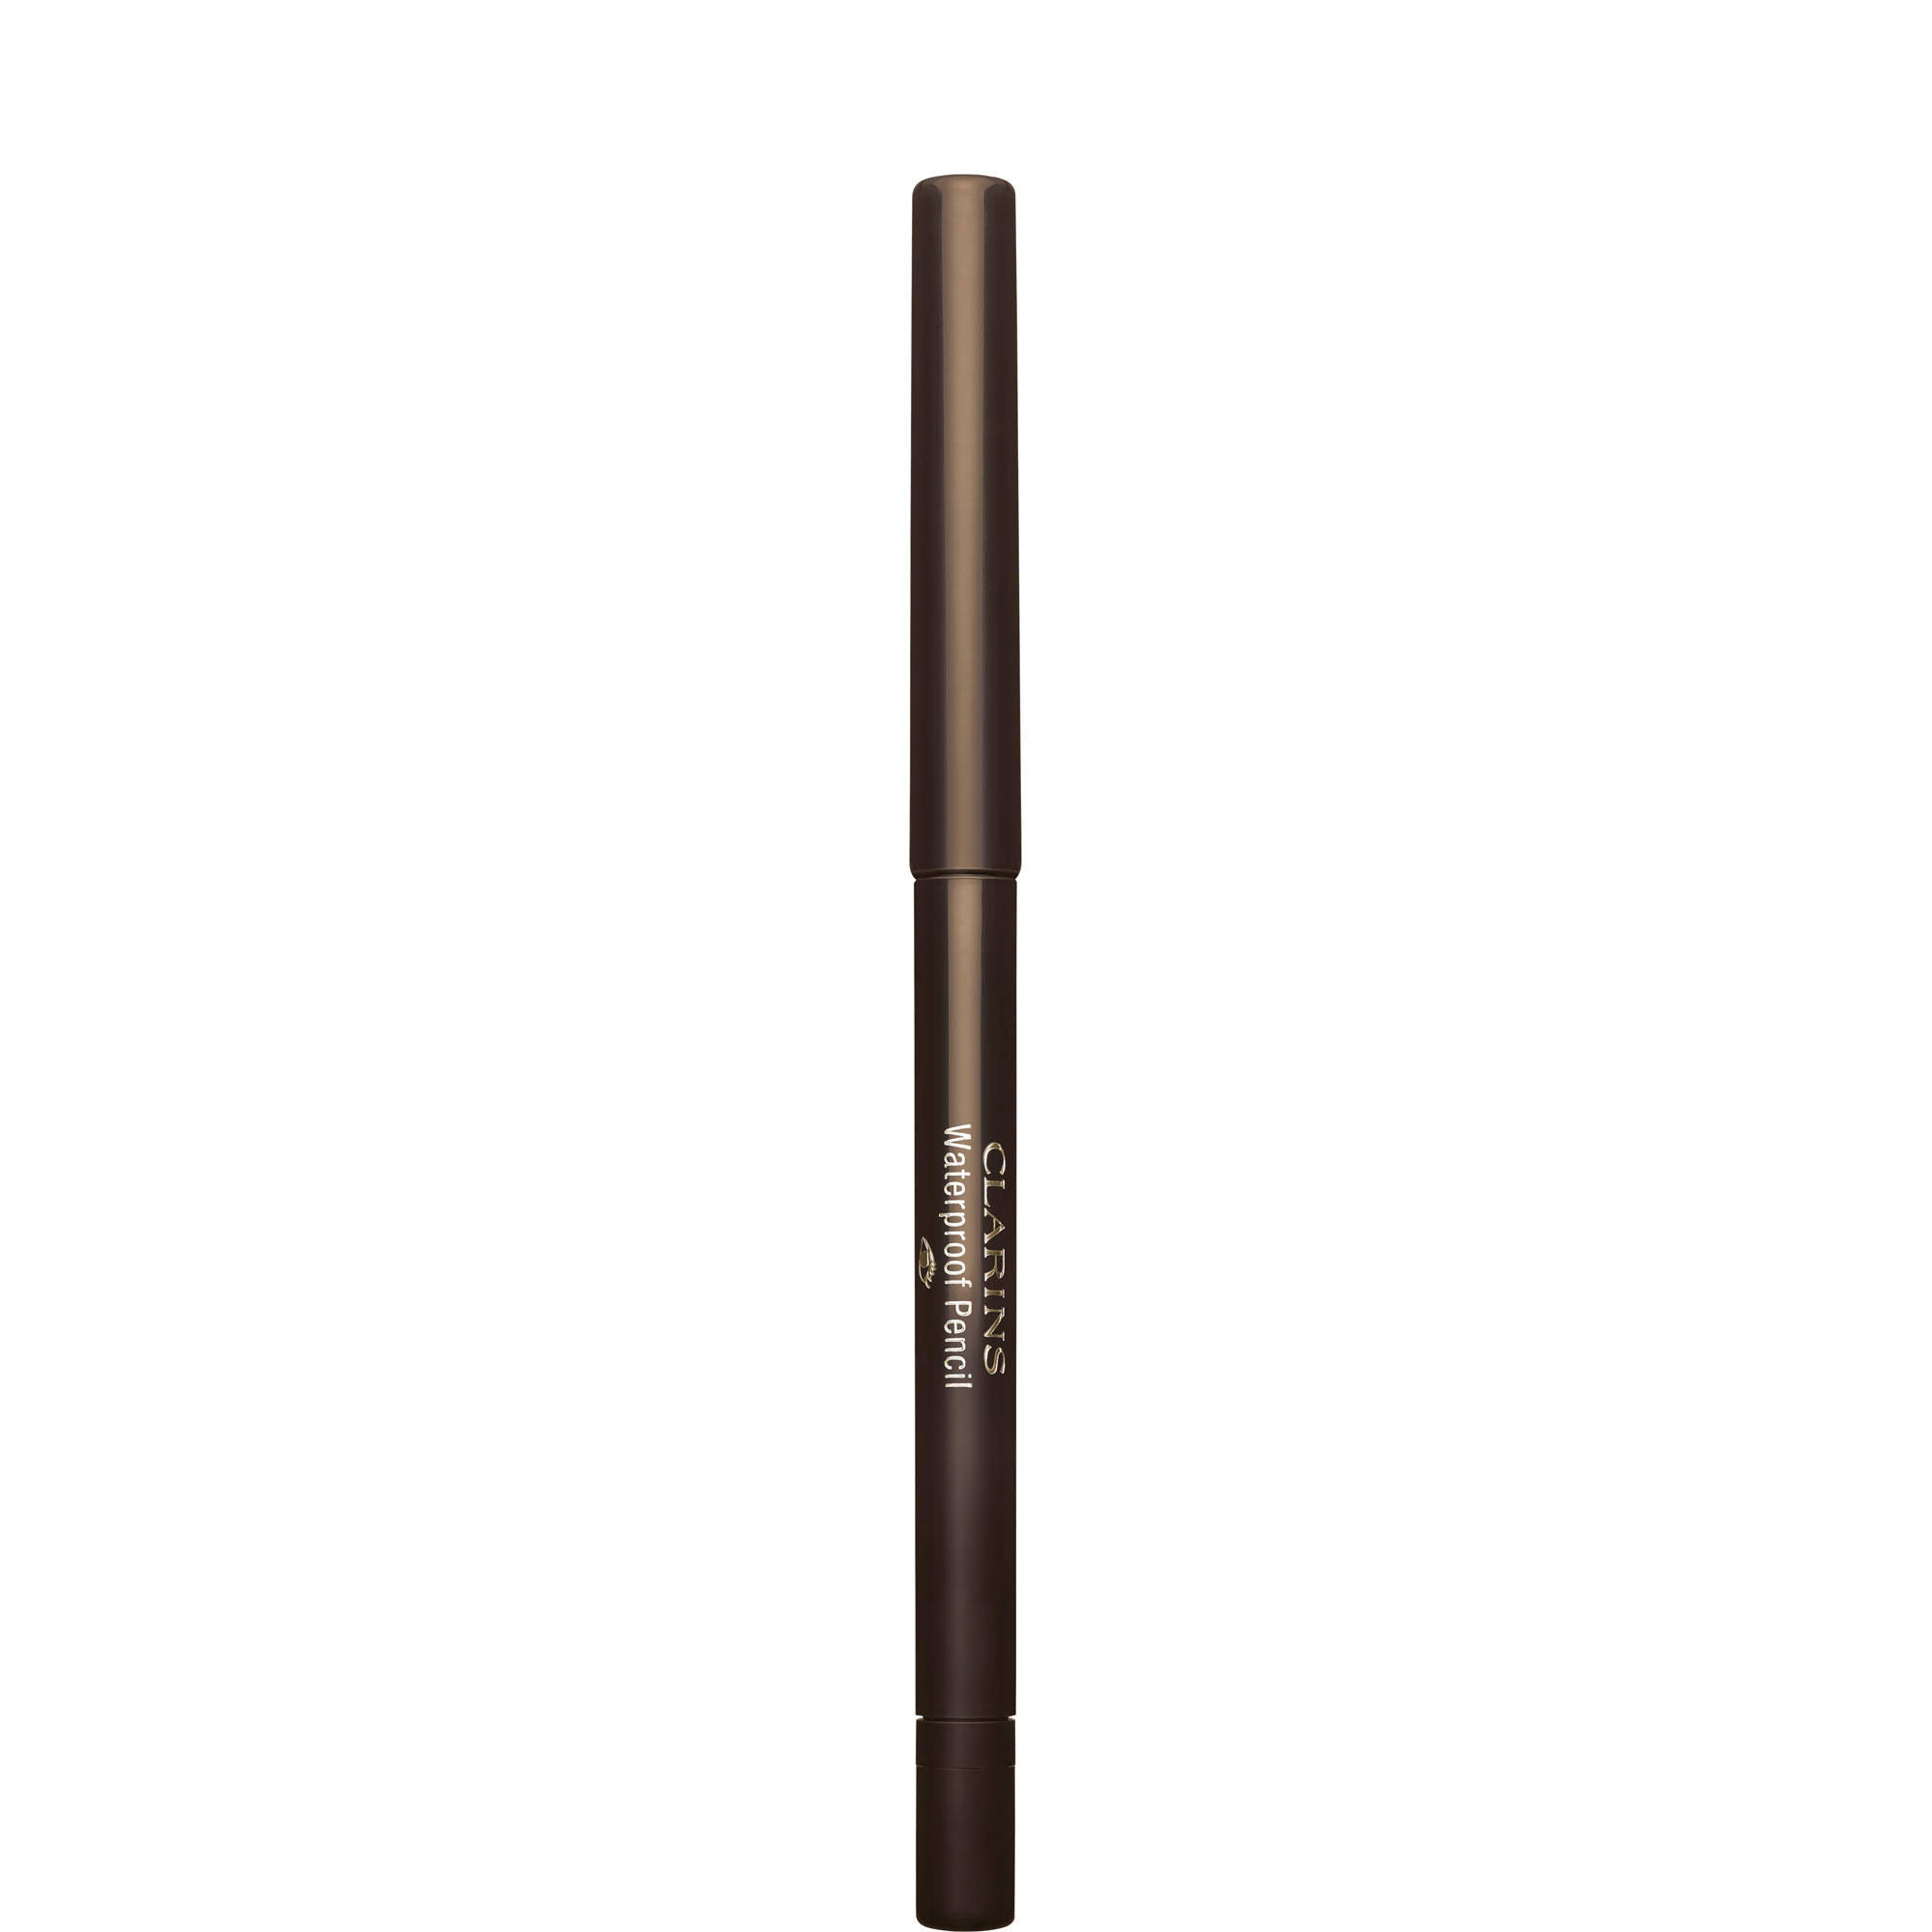 Clarins Waterproof Pencil Eyeliner - #02 Chestnut